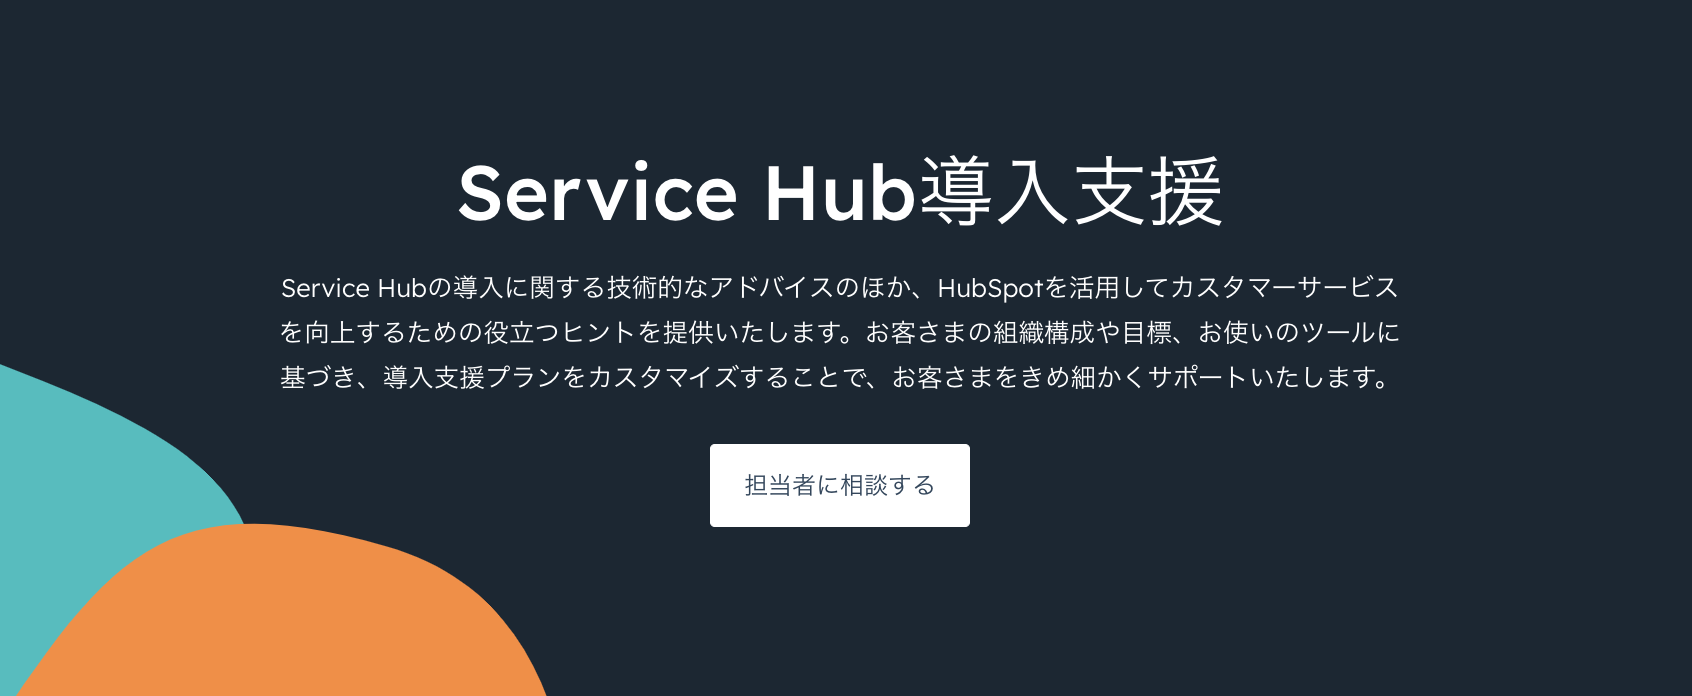 HubSpot Service Hub導入支援